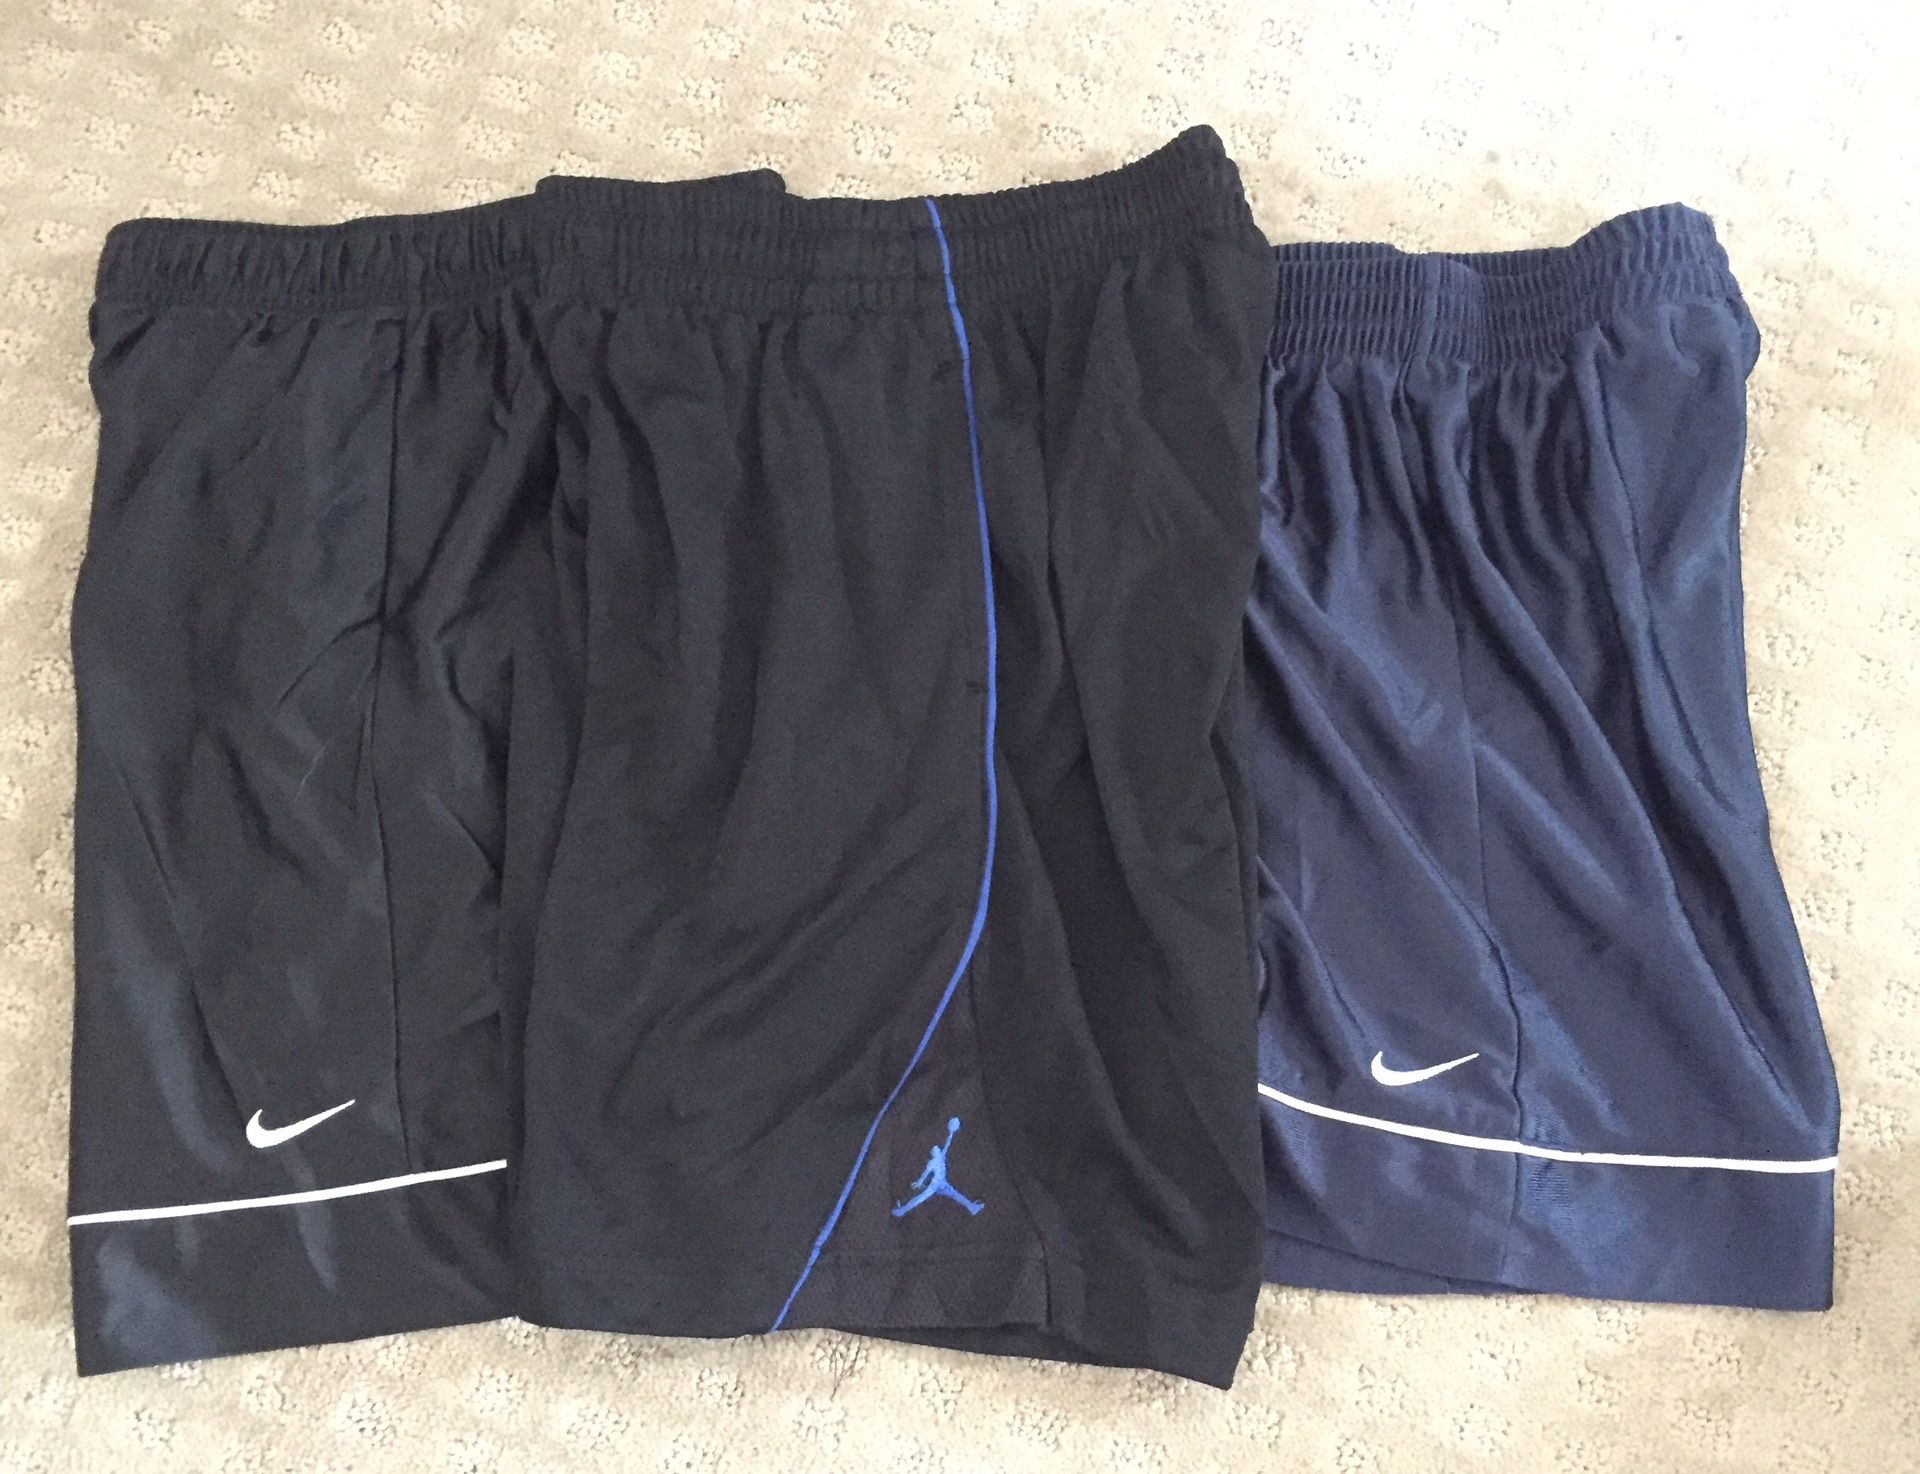 Basketball Shorts - Jordan Nike Size 7 $5 each